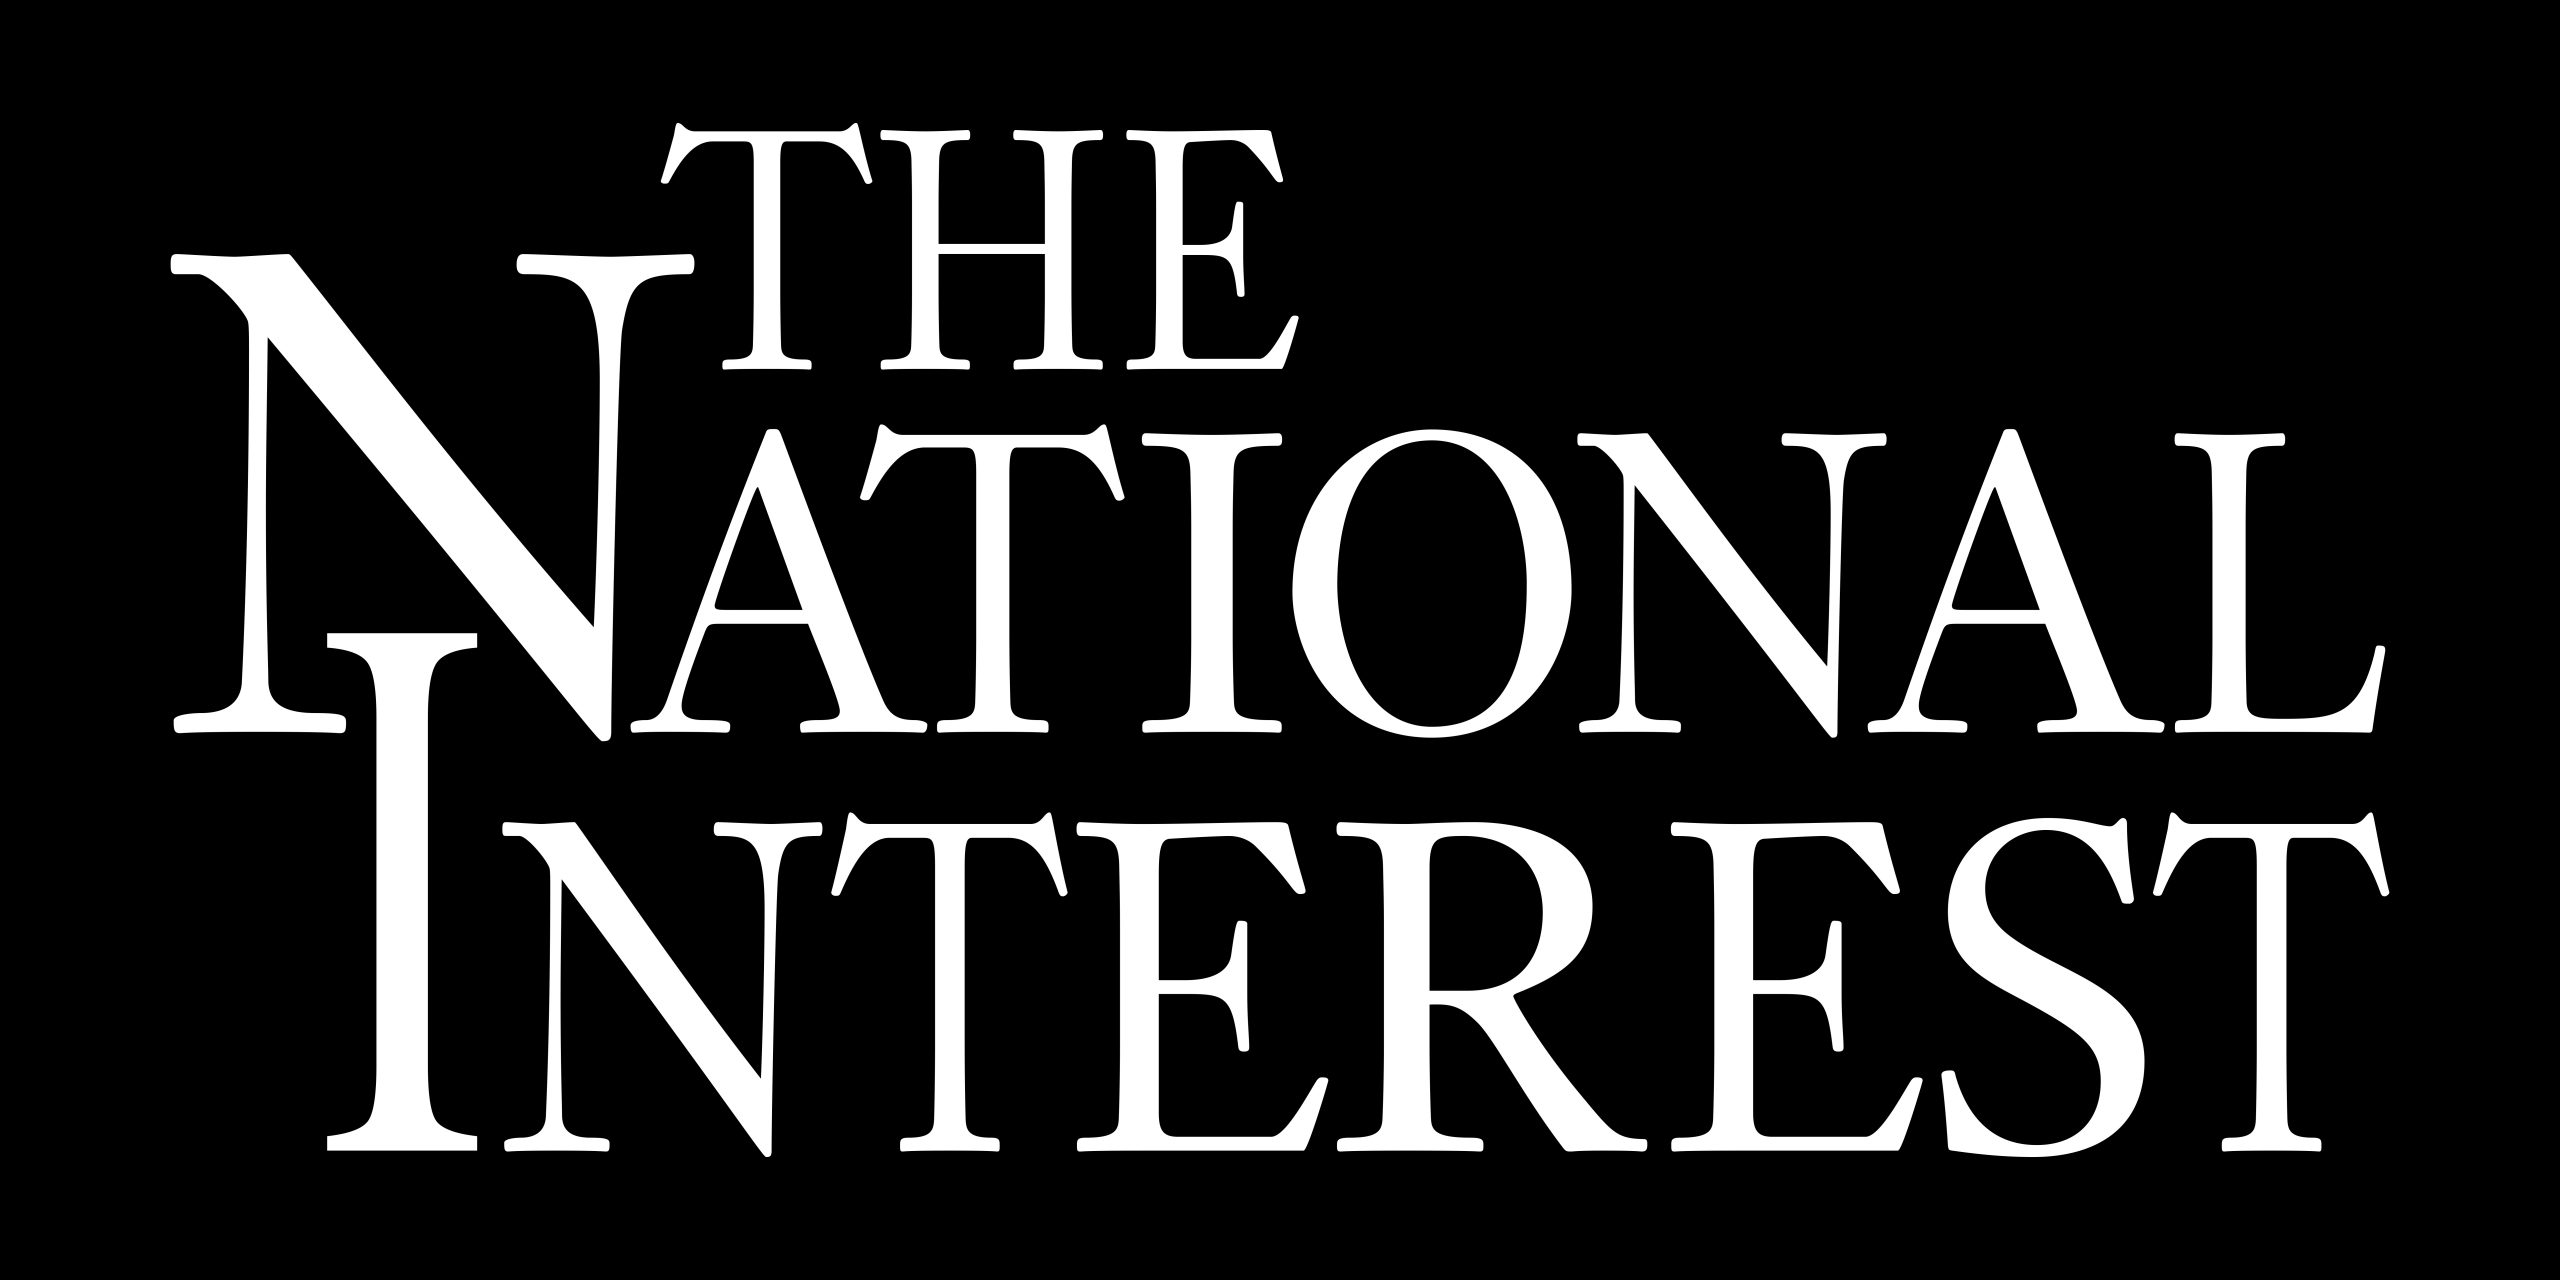 The National Interest - Atlantic Council